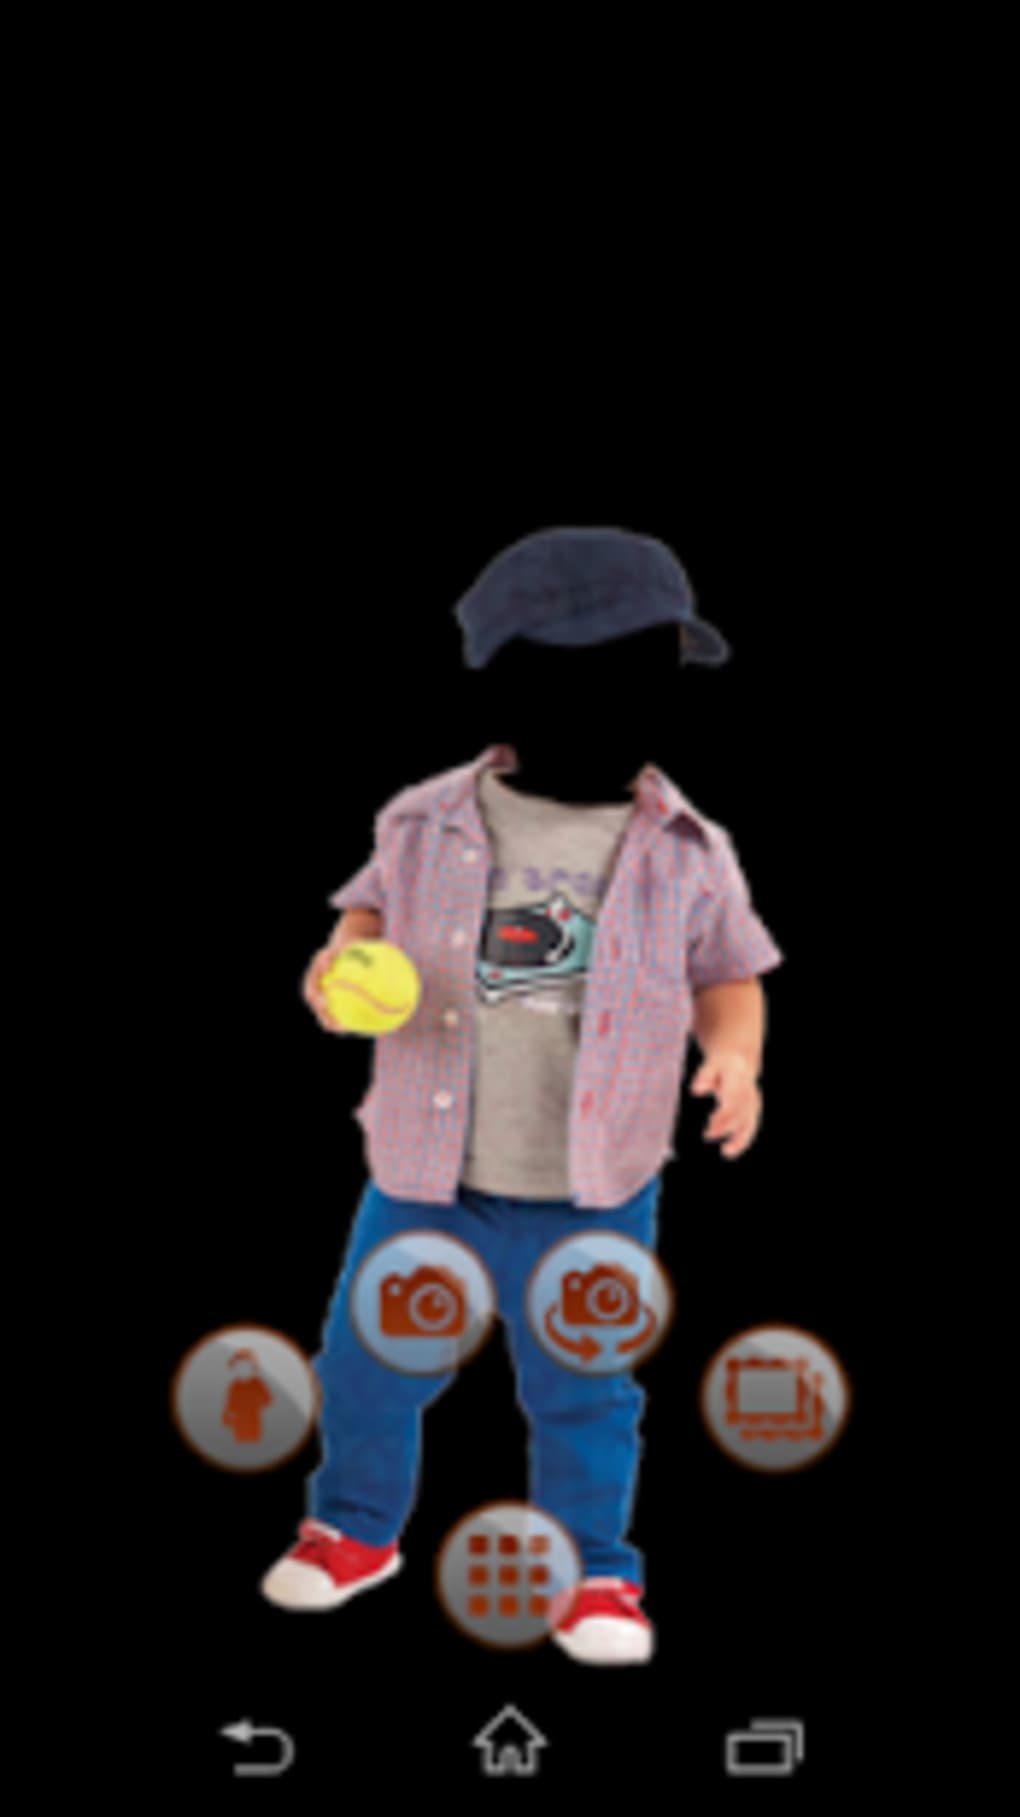 Baby Boy Fashion Suit für Android - Download